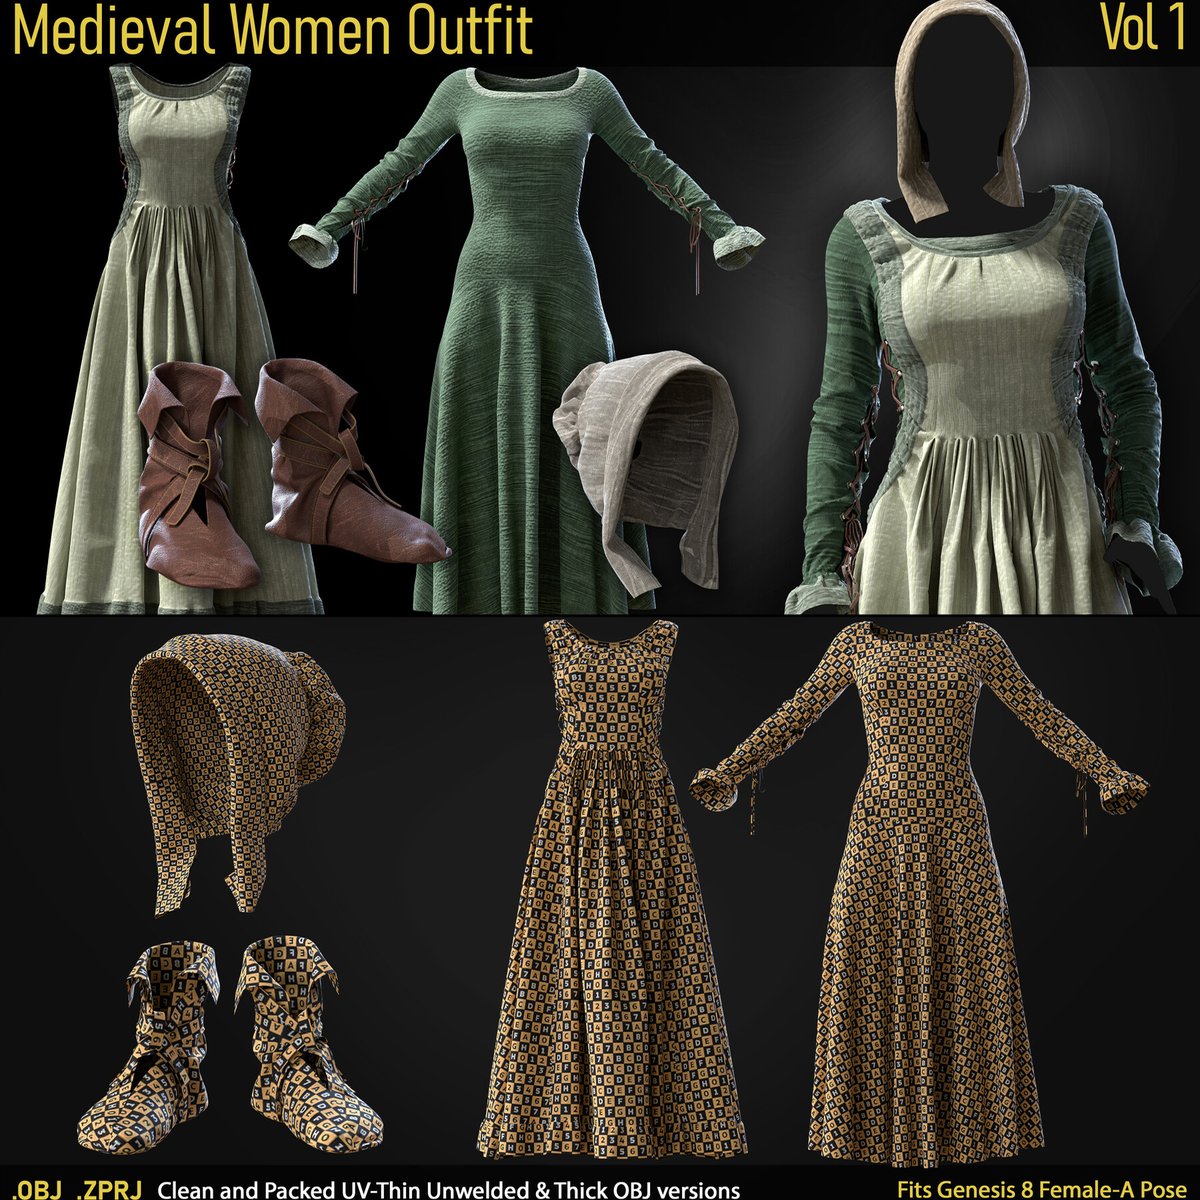 Medieval Women Outfit-Vol01

Artist: Debox Studio

artstation.com/a/28143020

#artstation #marvelousdesigner #substancepainter #marmoset #clo3d #medieval #women #woman #outfit #clothes #fabric #gamedesign #characterdesign #leather #3d #3dmodel #3dmodeling #cg #dress #scarf #boots